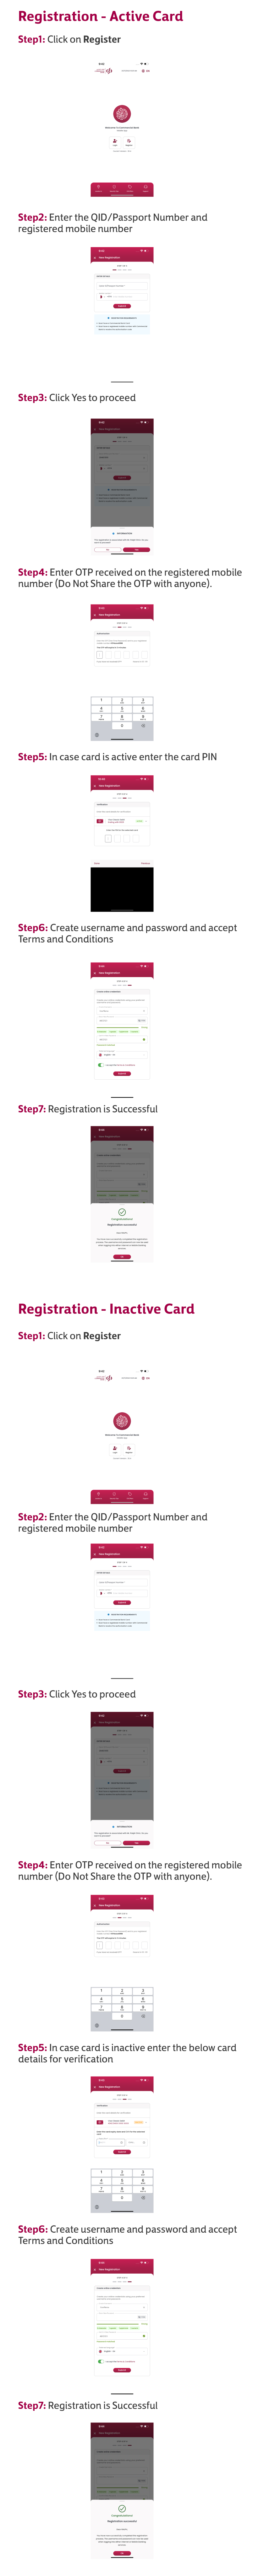 Registration-Steps-ENAR.jpg